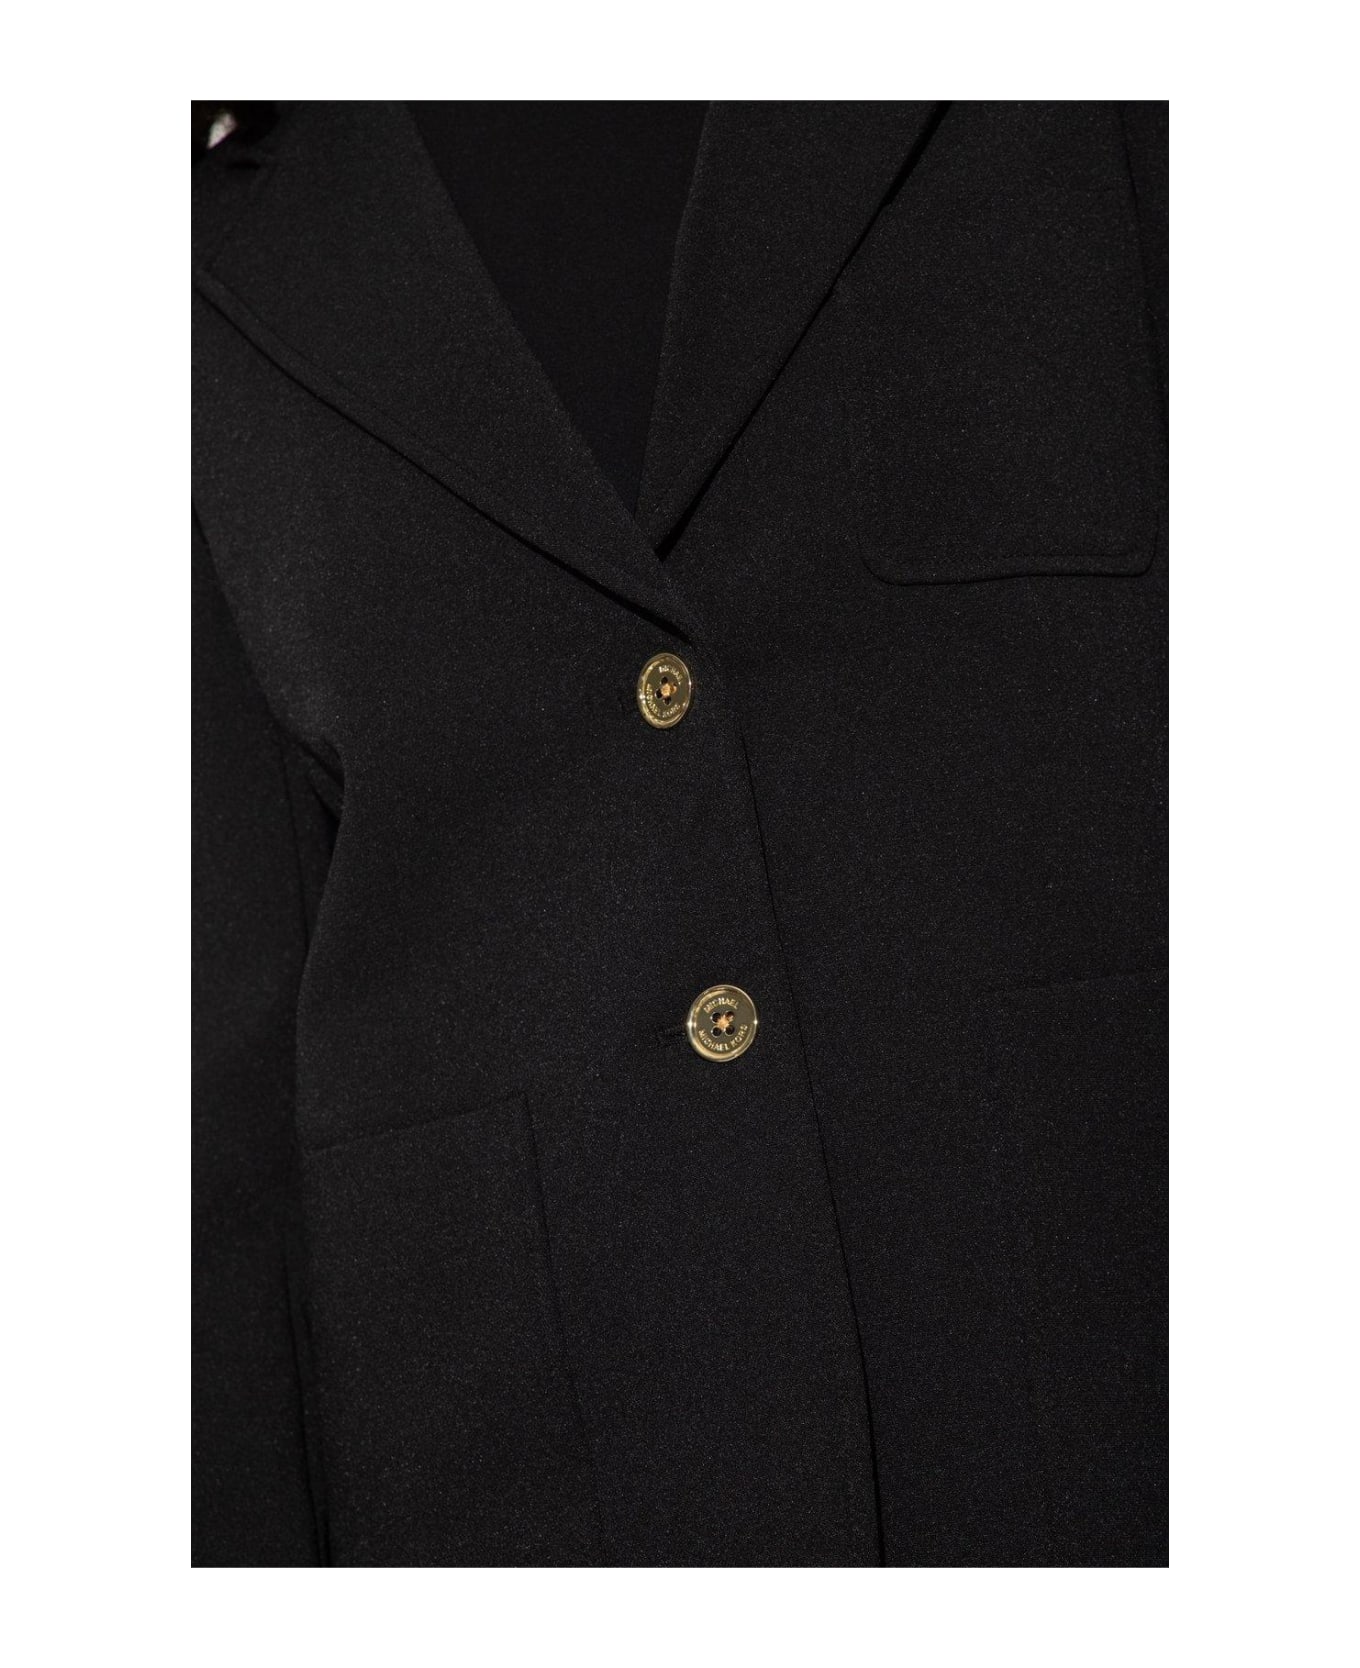 Michael Kors Buttoned Blazer - Black